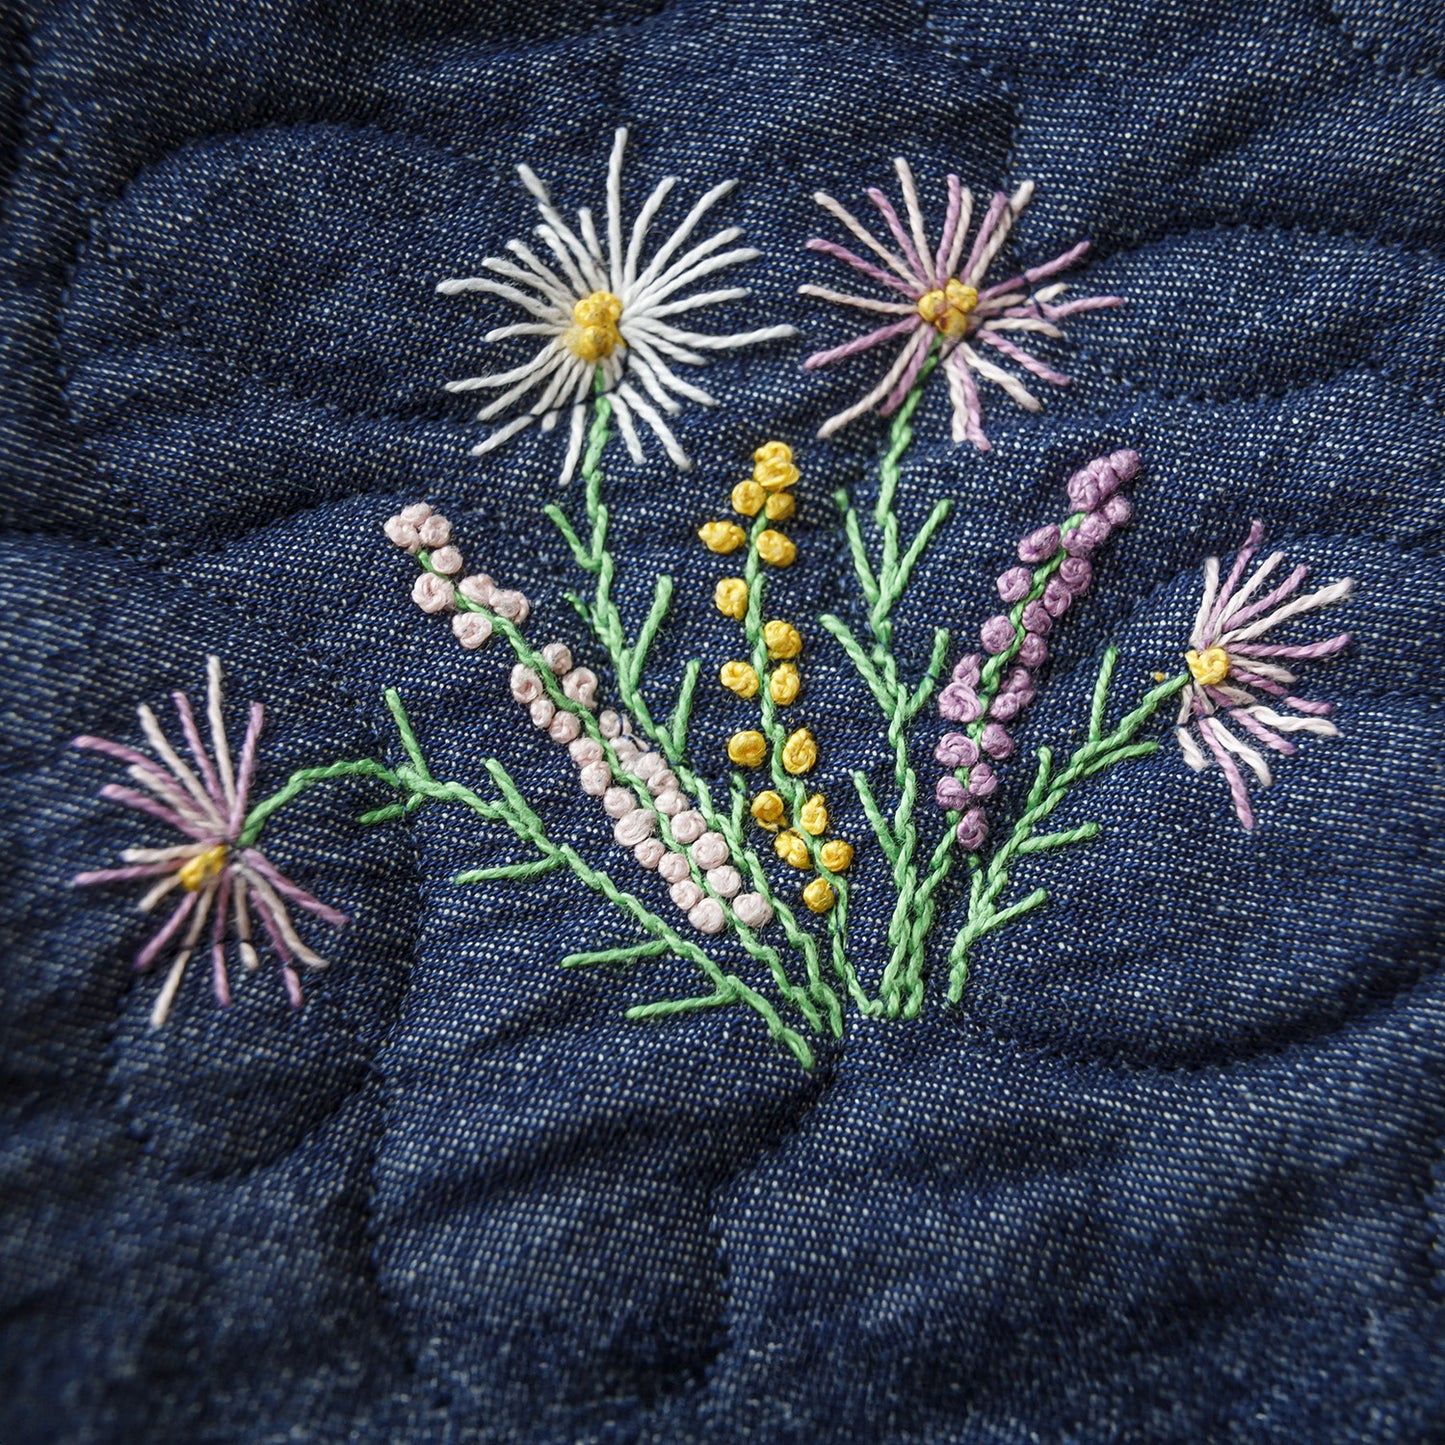 PREORDER - Ingrid's Wildflowers - An Heirloom Embroidery Kit by Missouri Star Alternative View #18